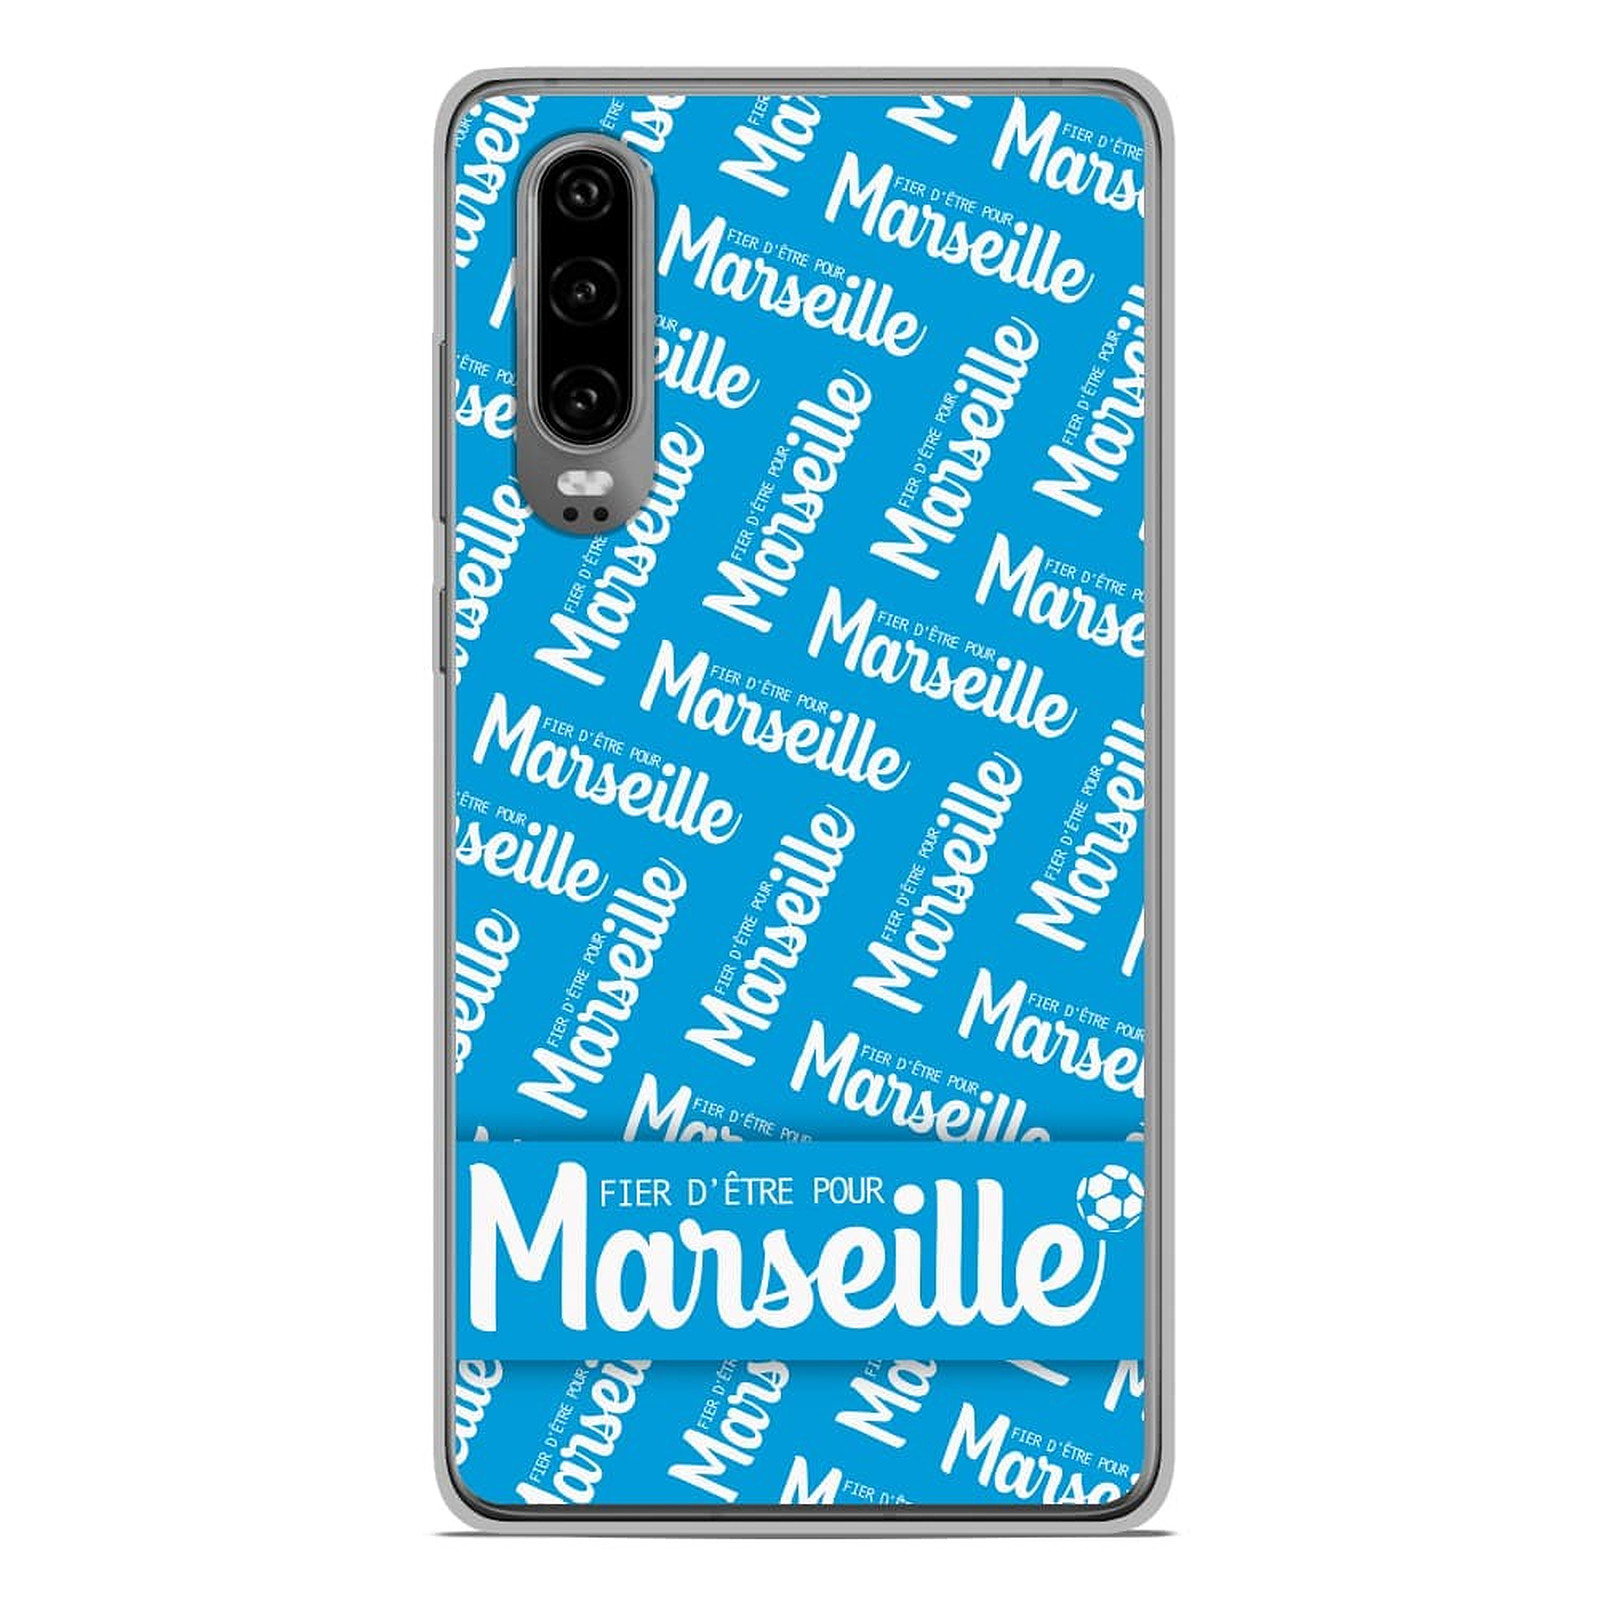 1001 Coques Coque silicone gel Huawei P30 motif Fier d'etre pour Marseille - Coque telephone 1001Coques